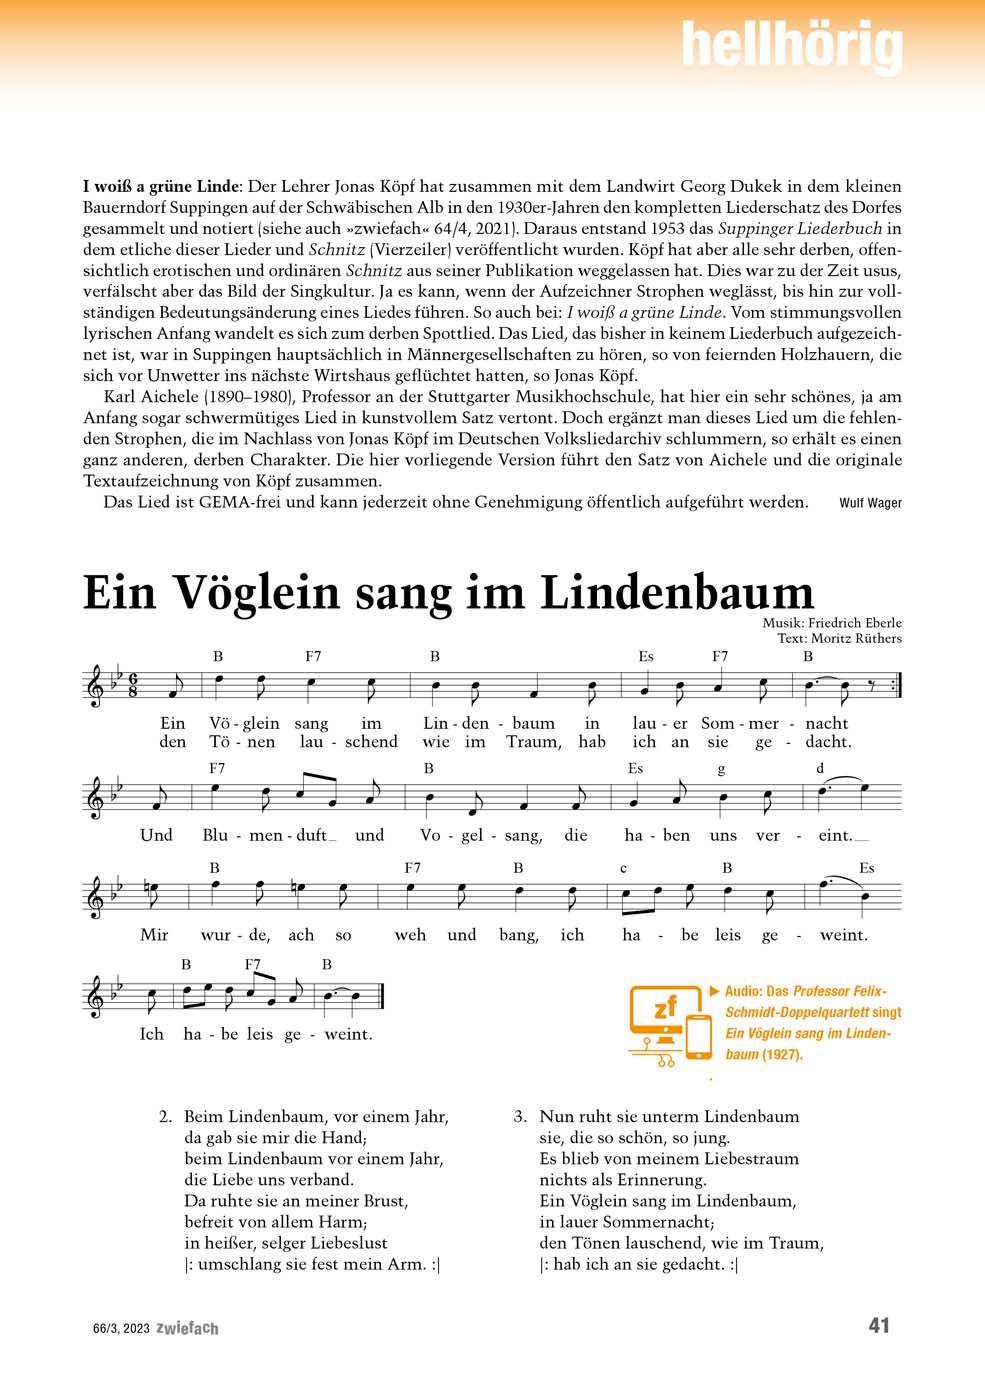 Ein Vöglein sang im Lindenbaum [1]